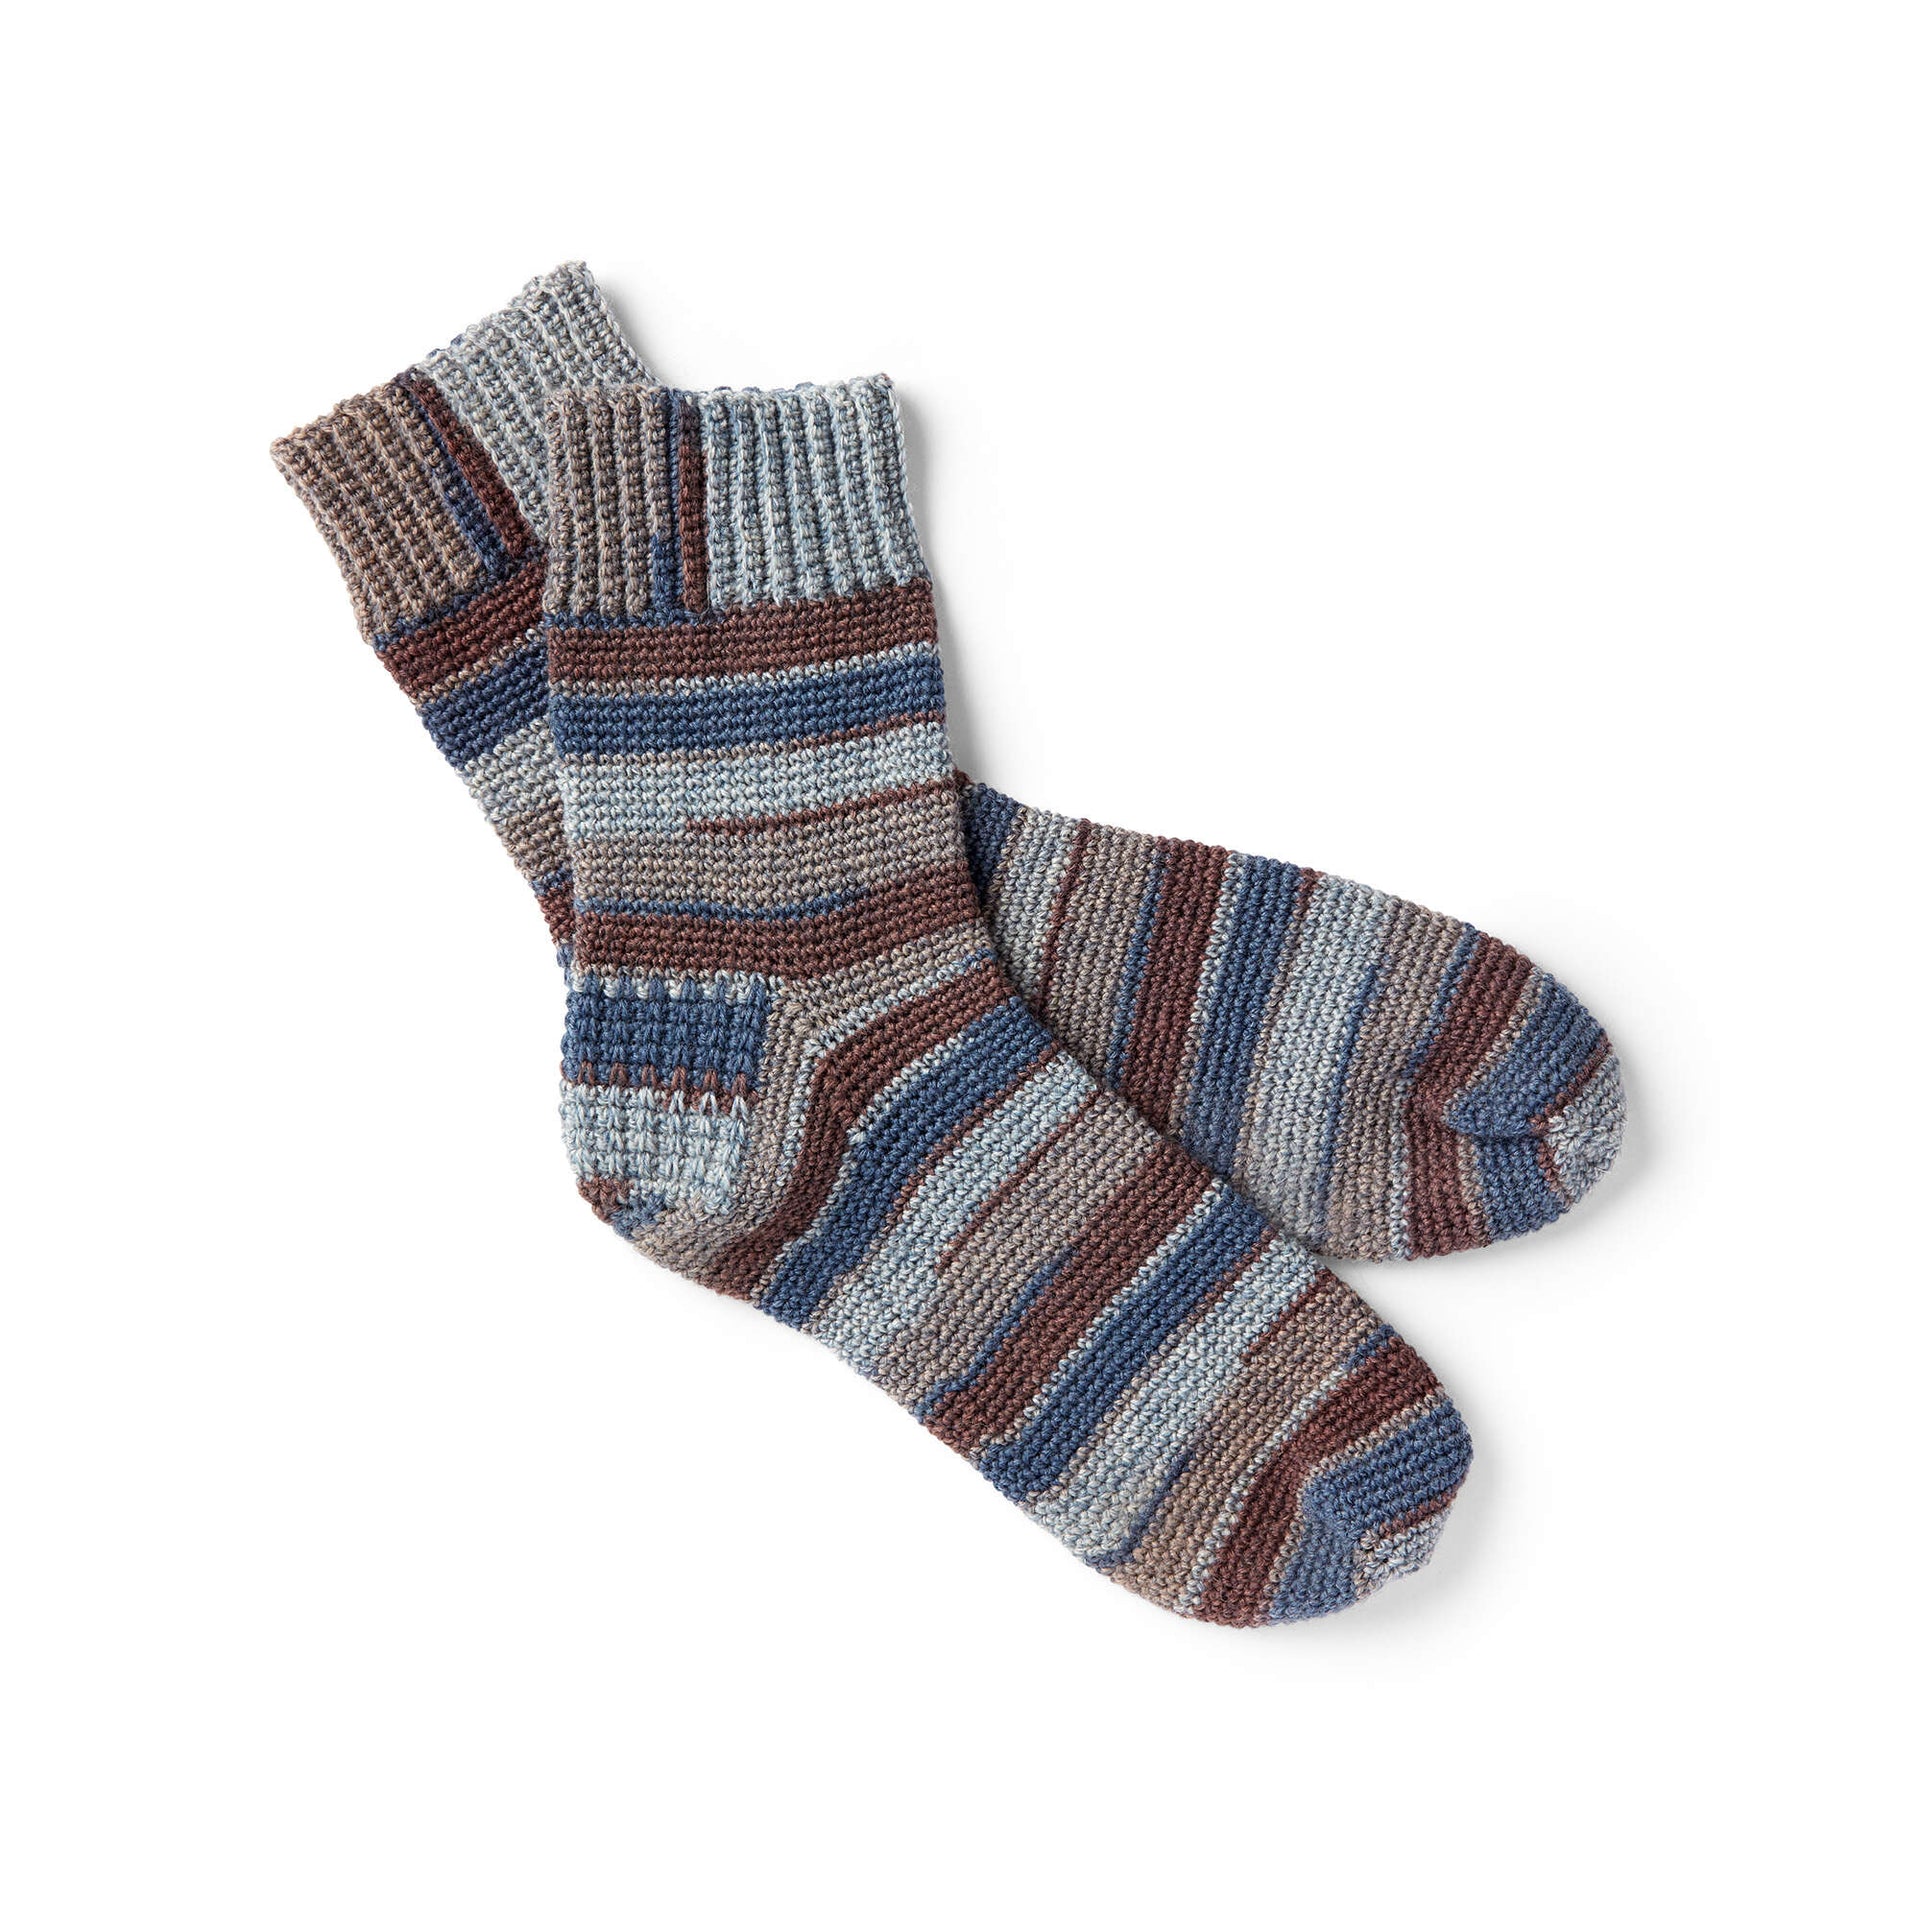 Ravelry: Yoga Socks #153 pattern by Patons